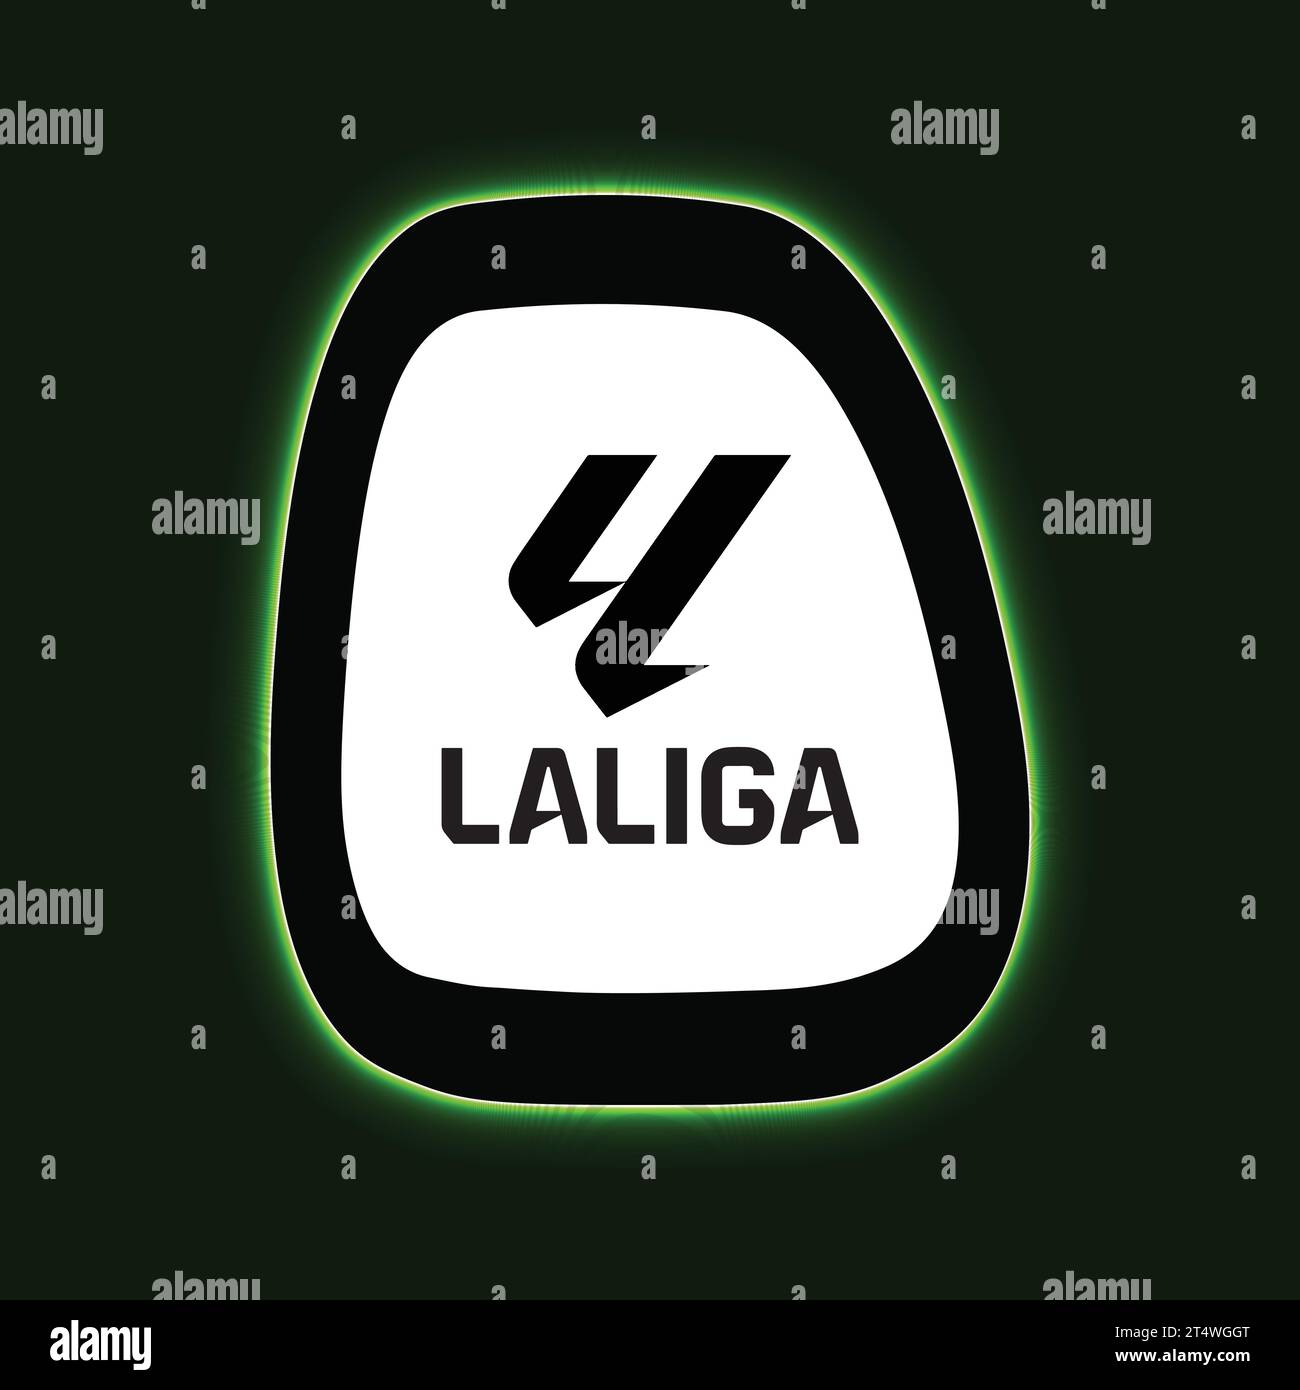 La liga logo Stock Vector Images - Alamy